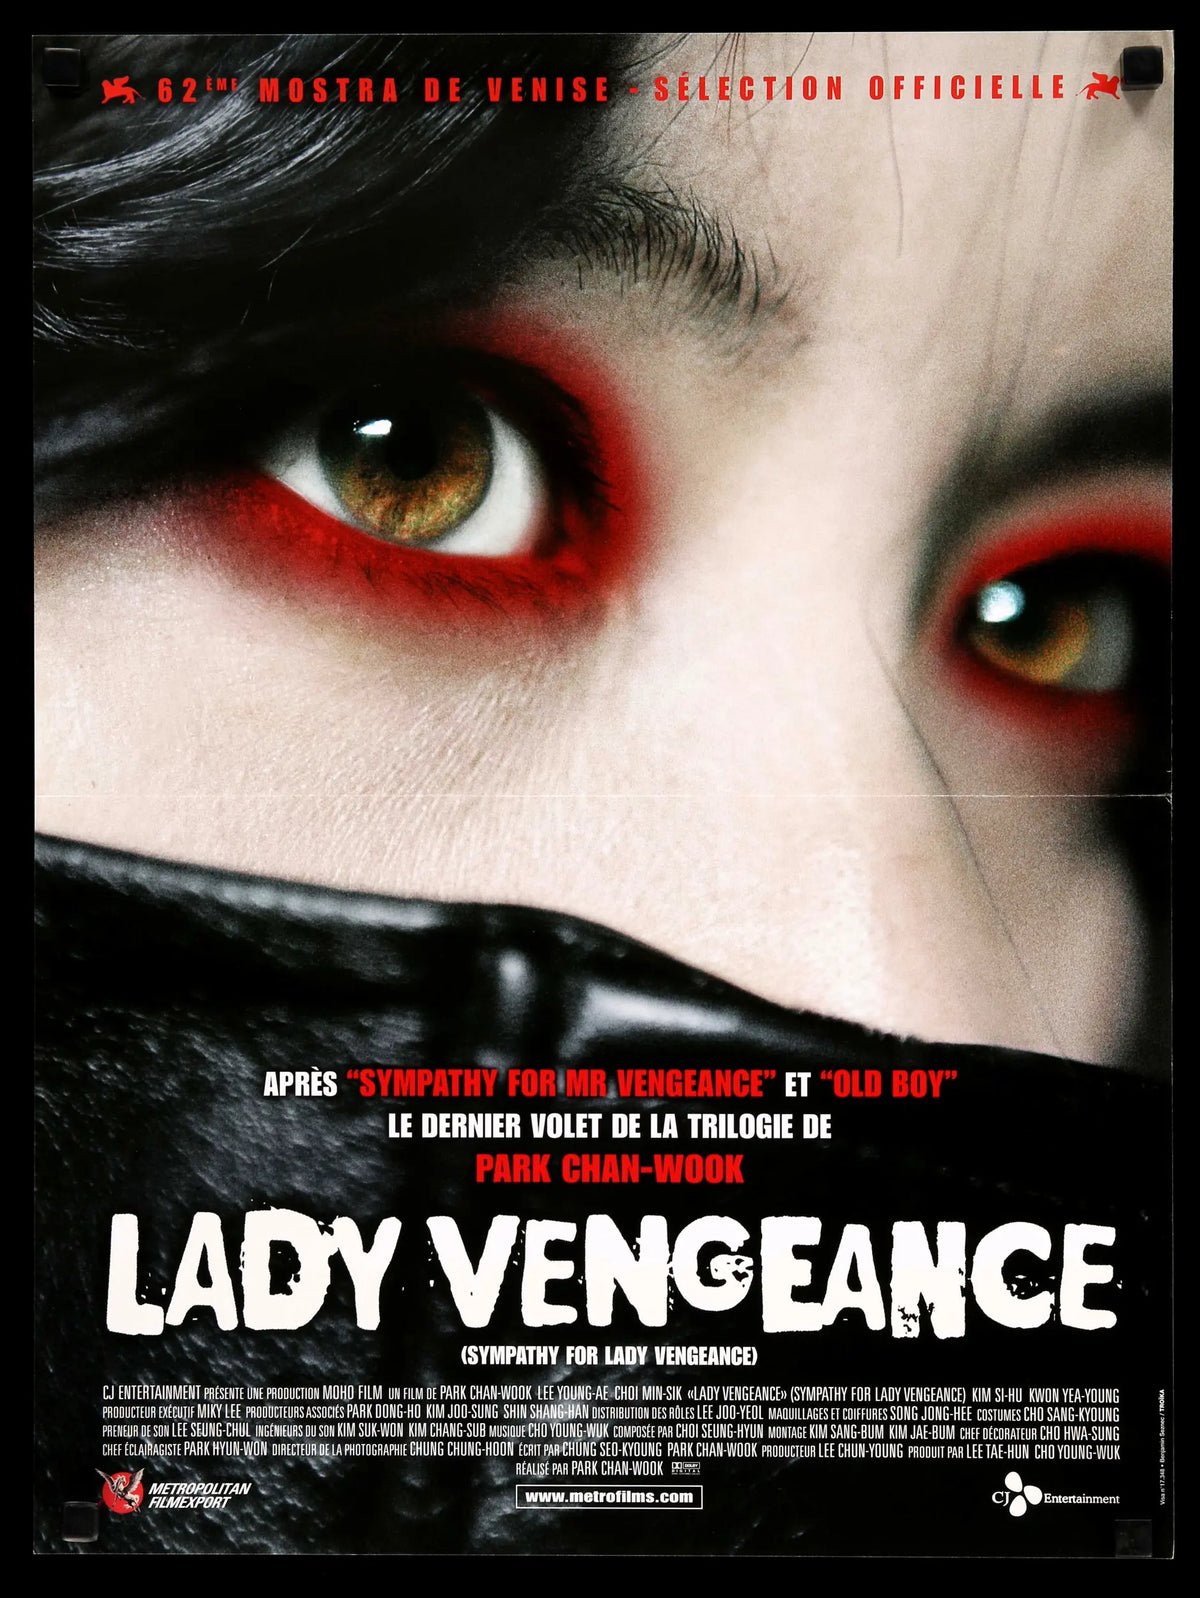 Lady Vengeance (2005) original movie poster for sale at Original Film Art